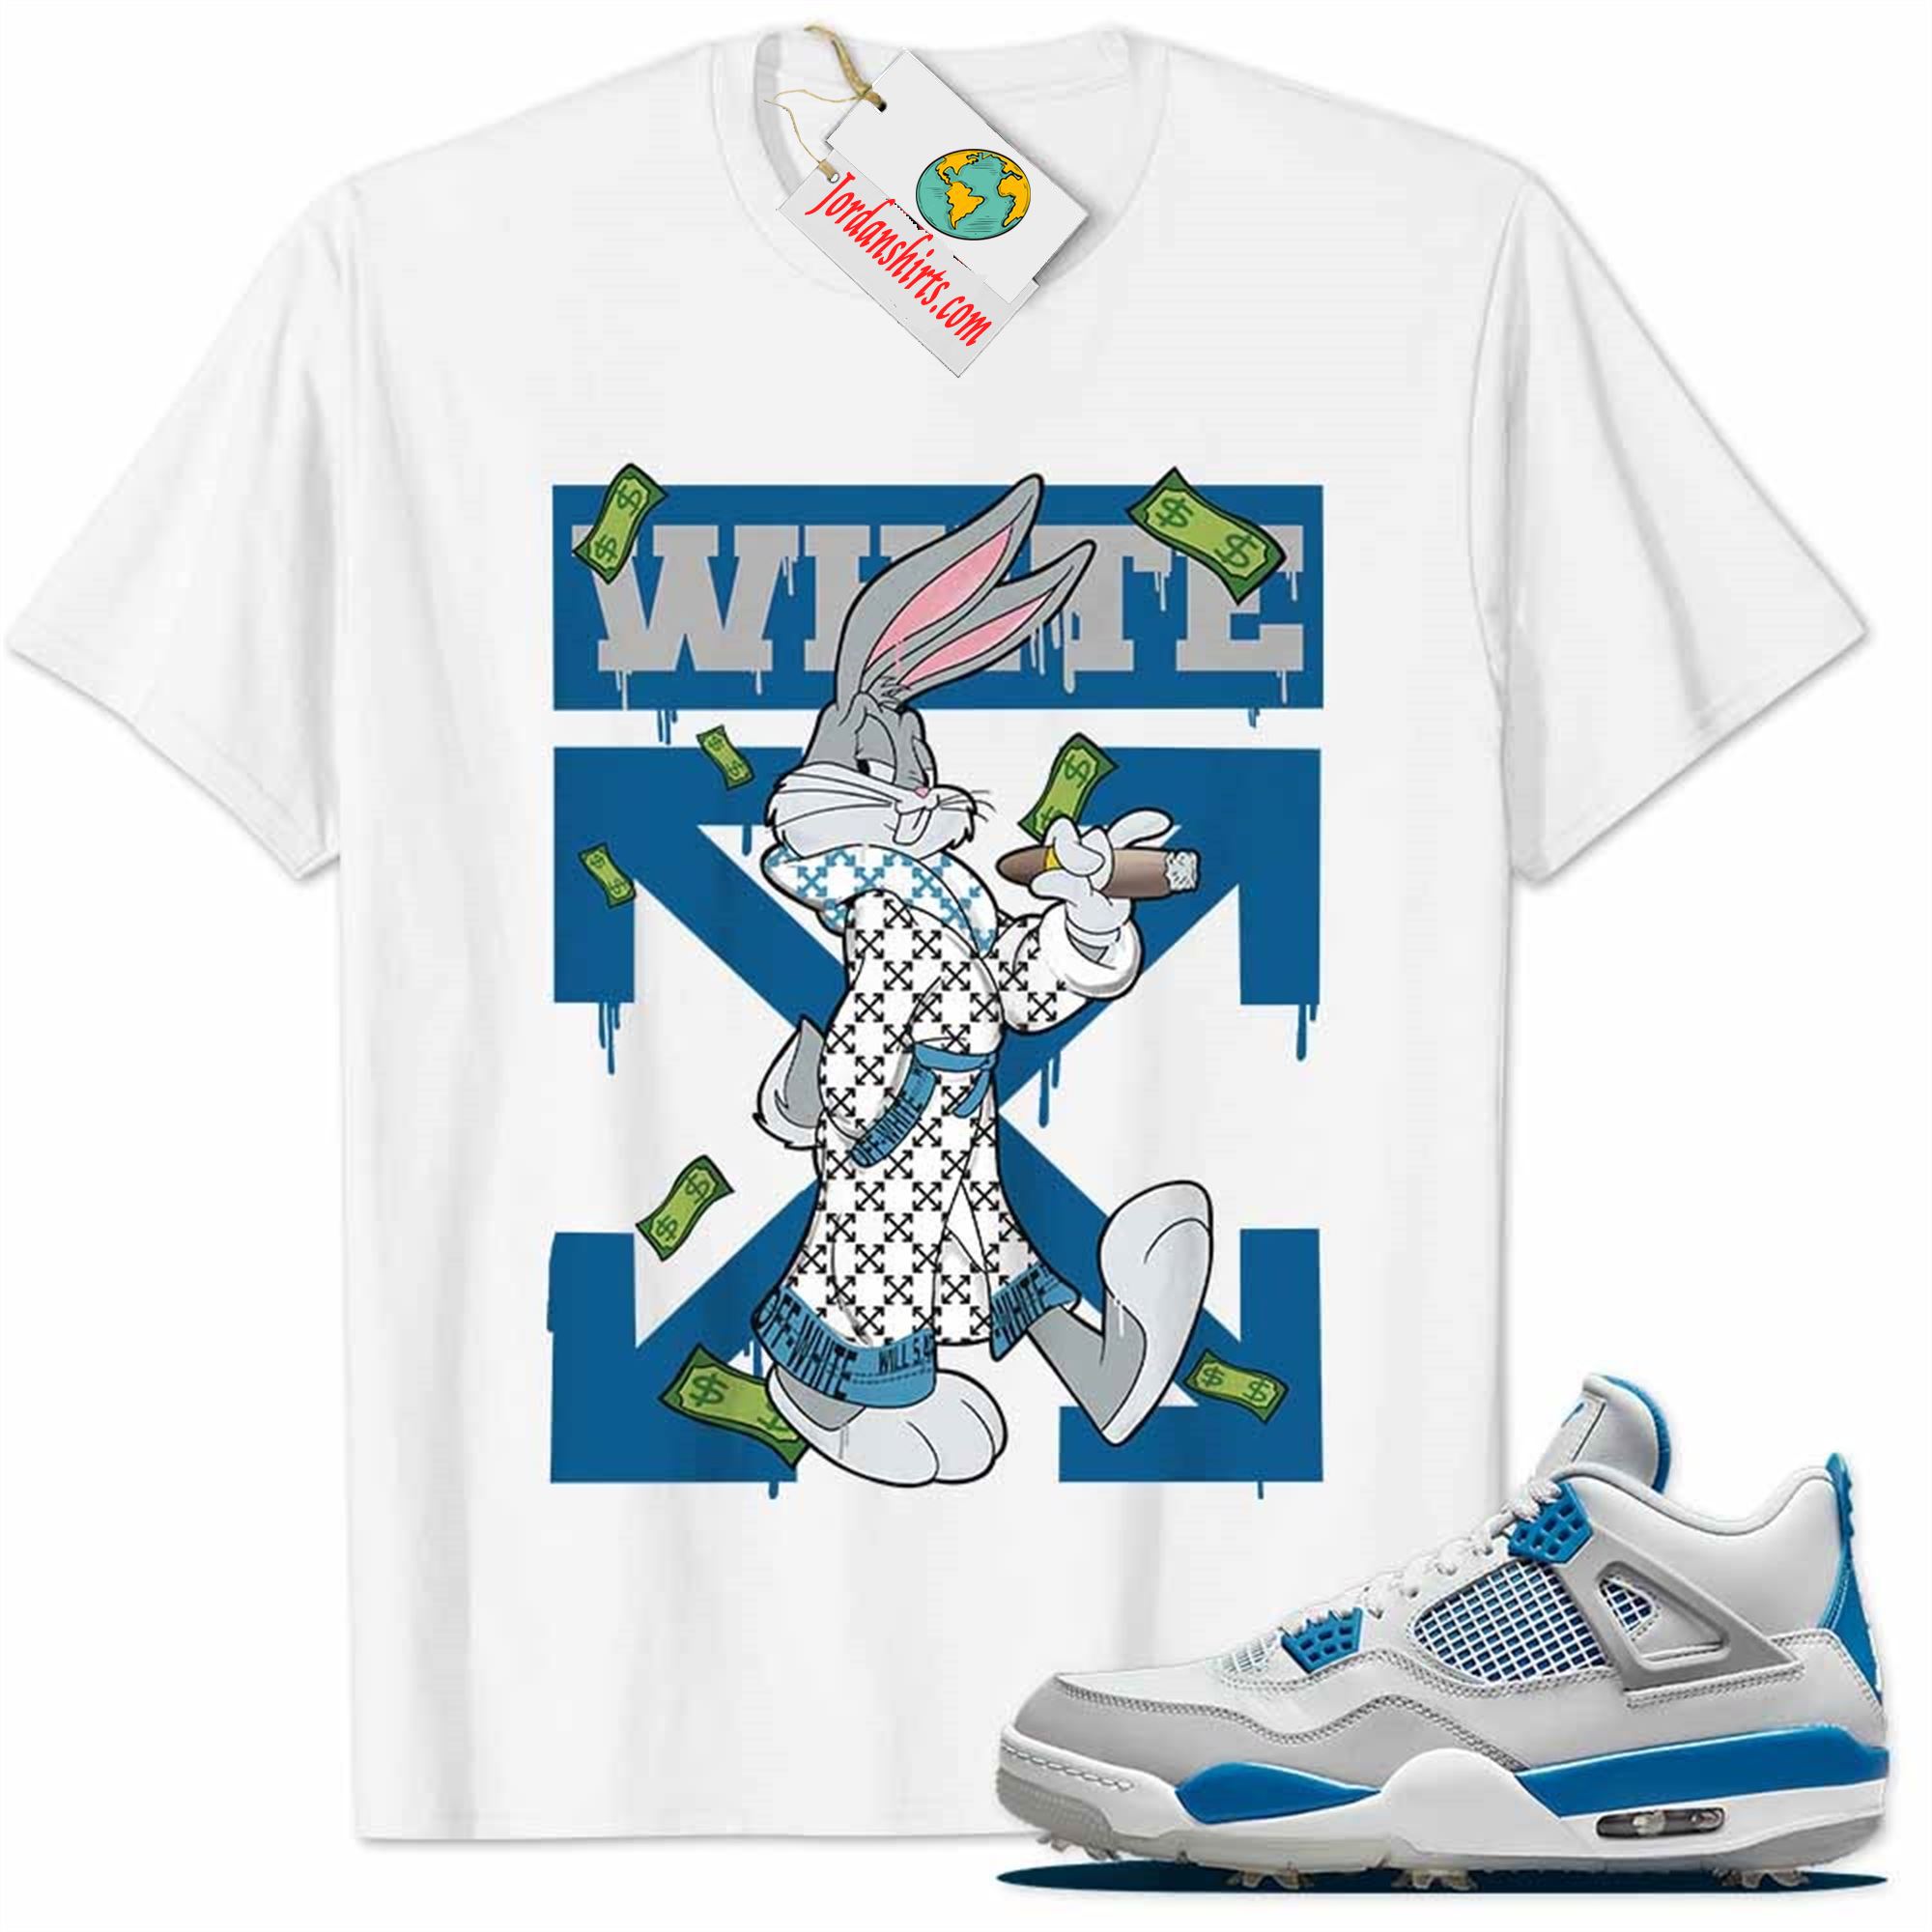 Jordan 4 Shirt, Jordan 4 Golf Military Blue Shirt Bug Bunny Smokes Weed Money Falling White Plus Size Up To 5xl